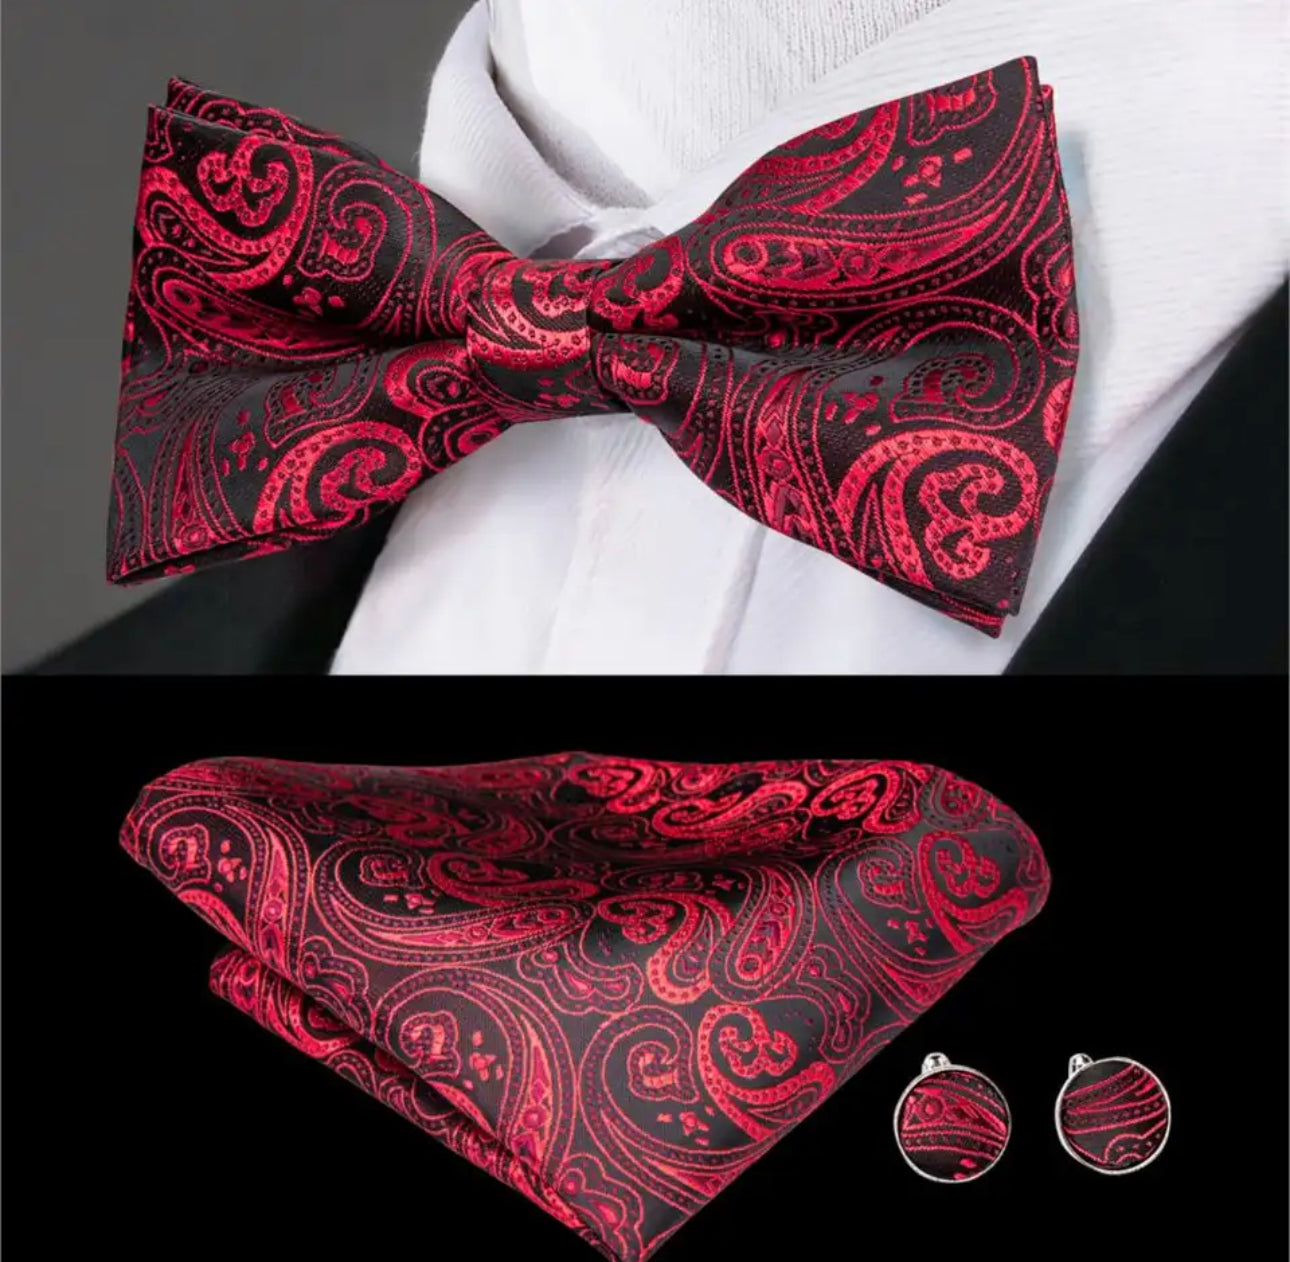 Men’s Silk Coordinated Black Bow Tie Set - Red Black Paisley 0789